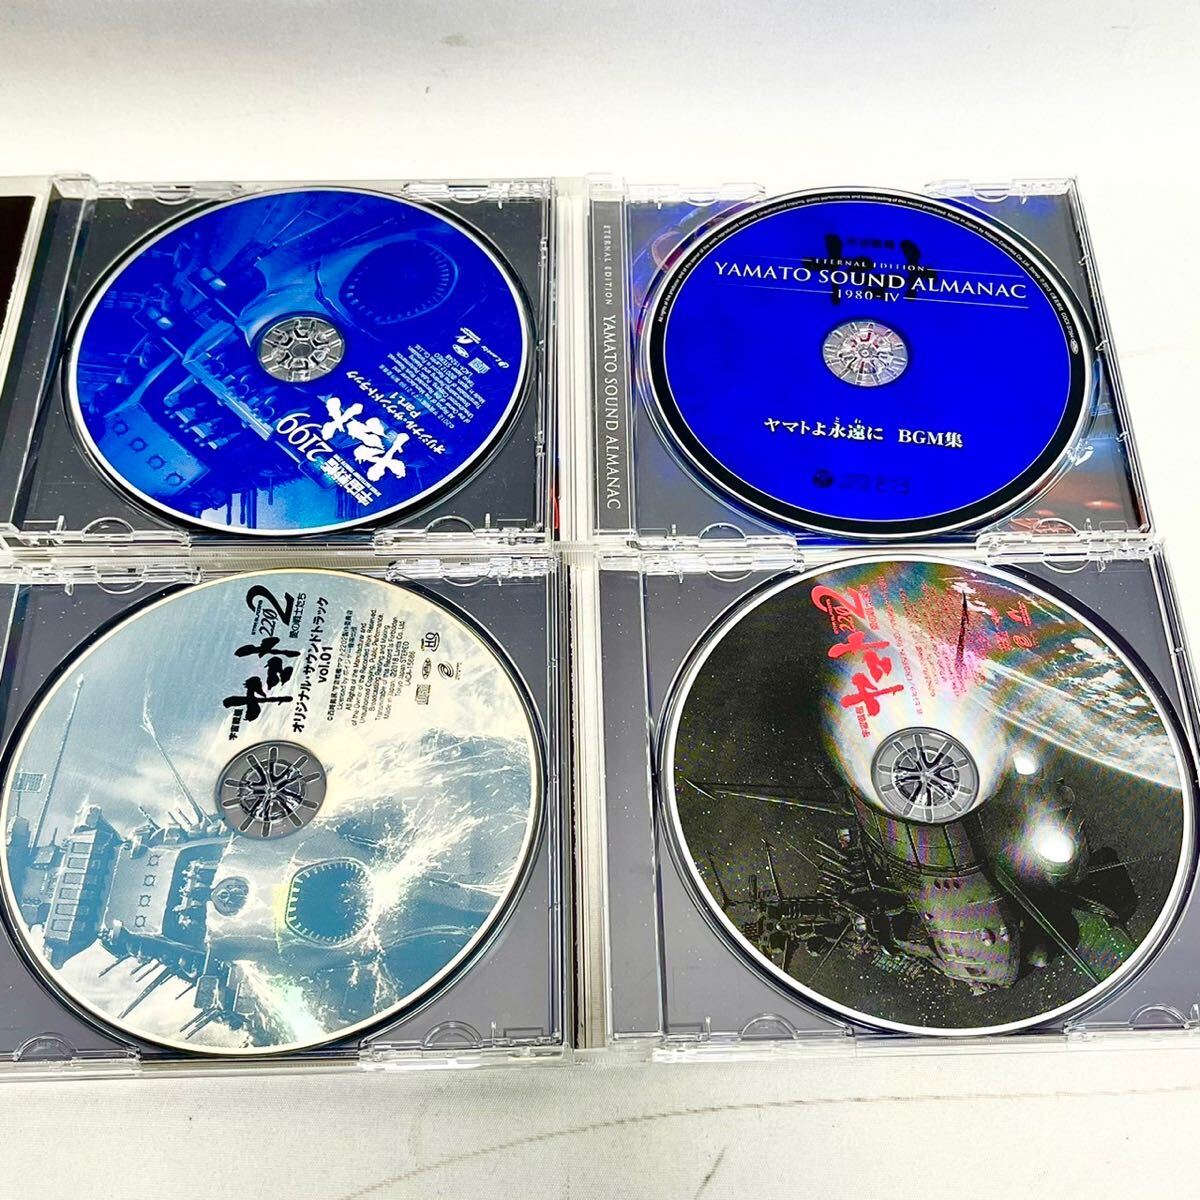  Uchu Senkan Yamato CD продажа комплектом 9 шт. комплект 